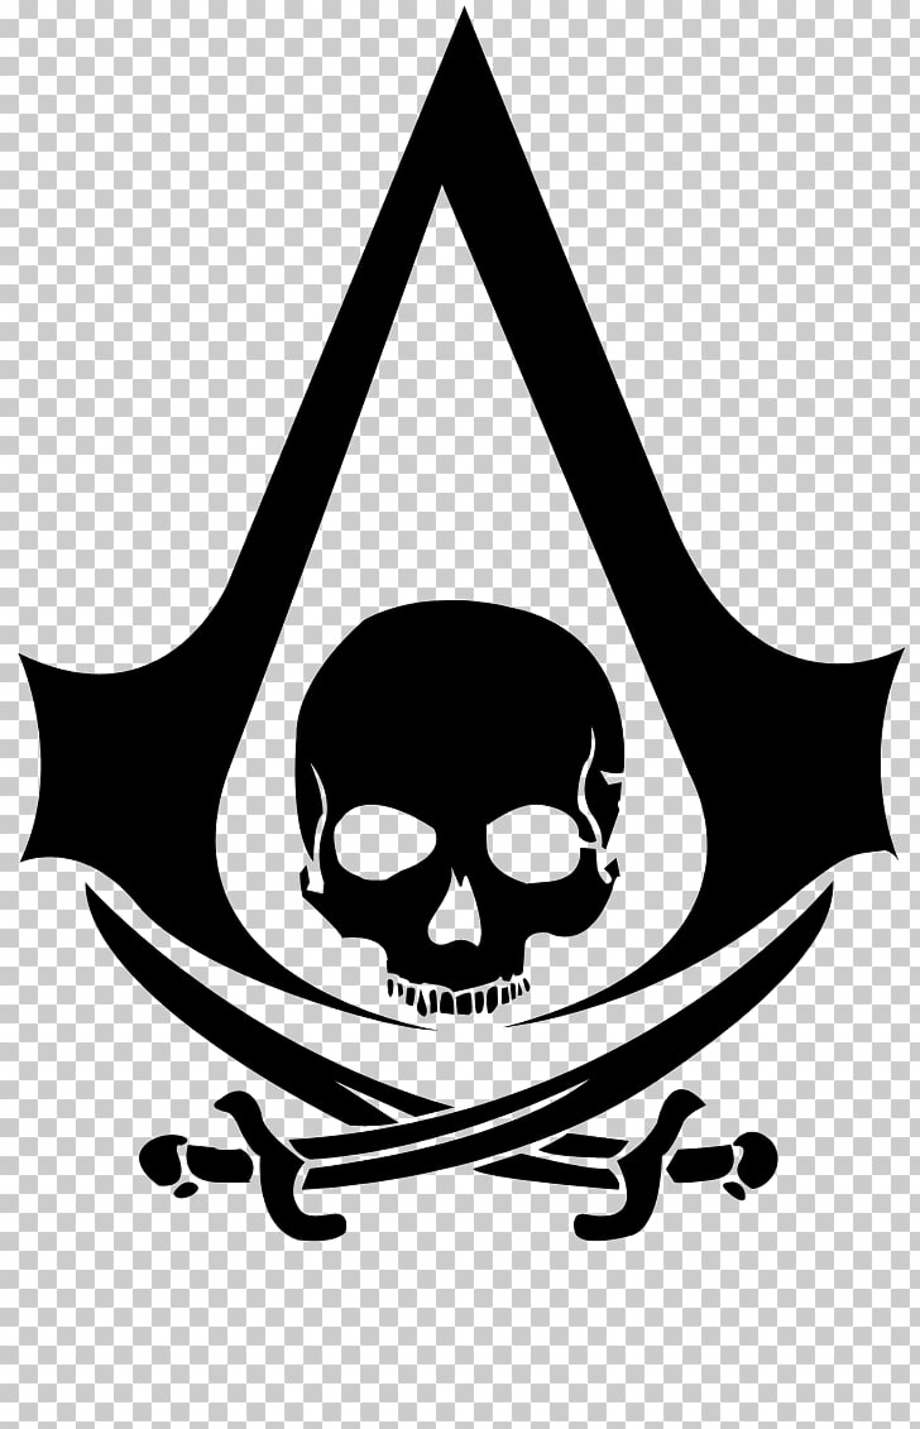 Download High Quality Assassins Creed Logo Black Flag Transparent Png